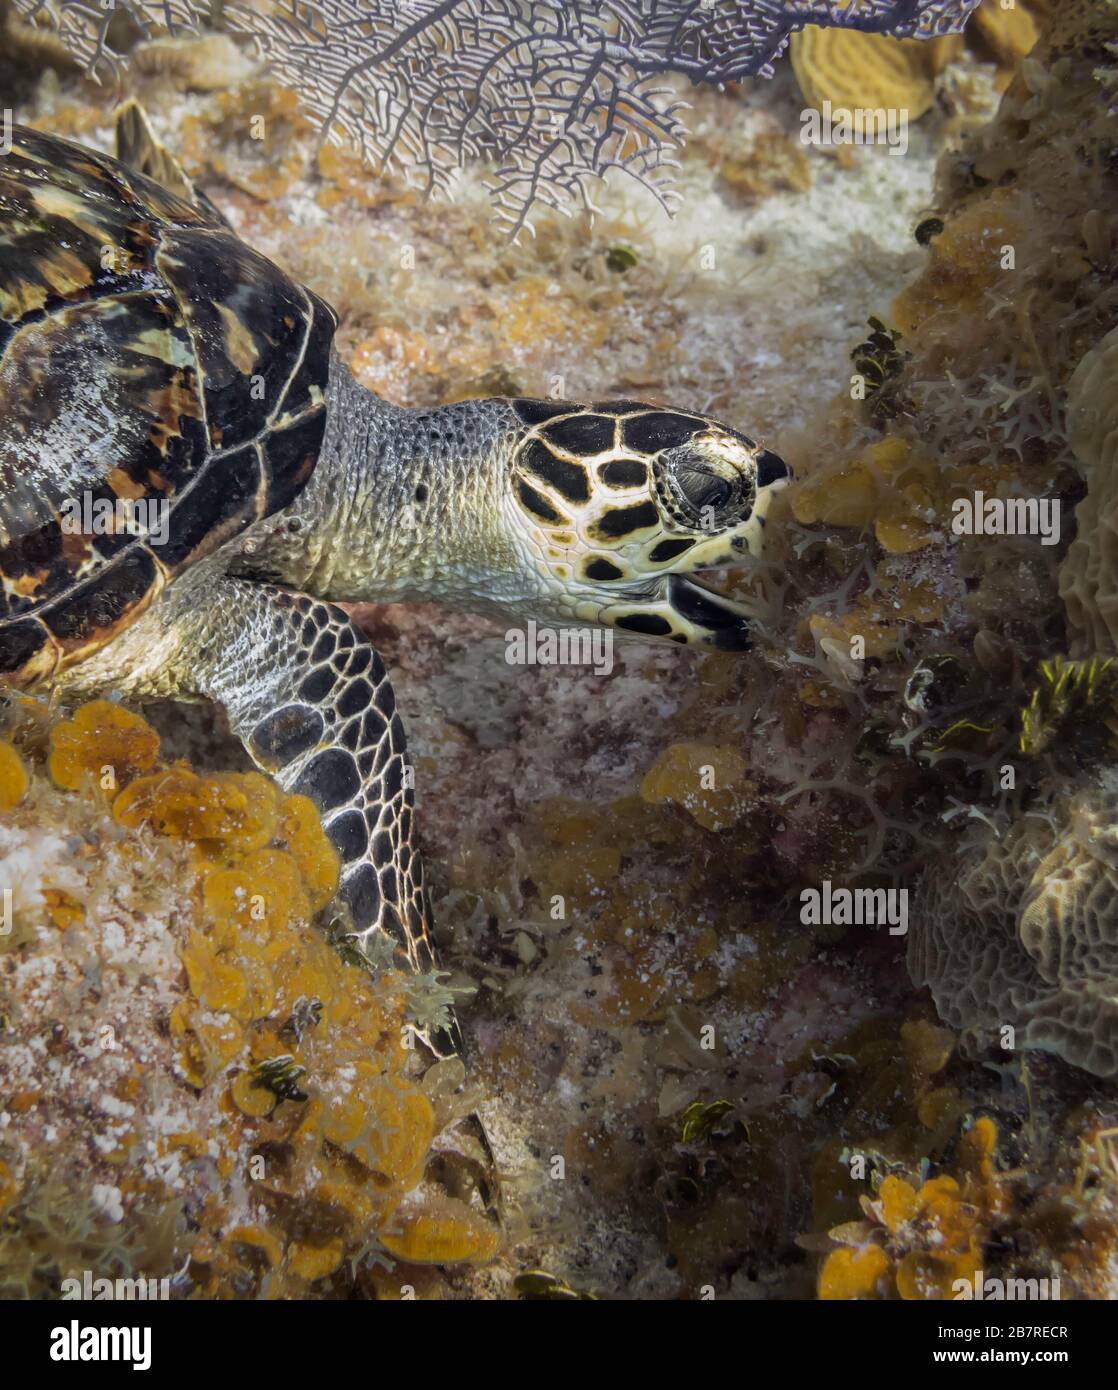 Hawksbill Meeresschildkröte (Eretmochelys imbricata), die Algen auf einem Korallenriffe isst, Cayman Inseln, Karibik Meer, Atlantik, Farbe Stockfoto